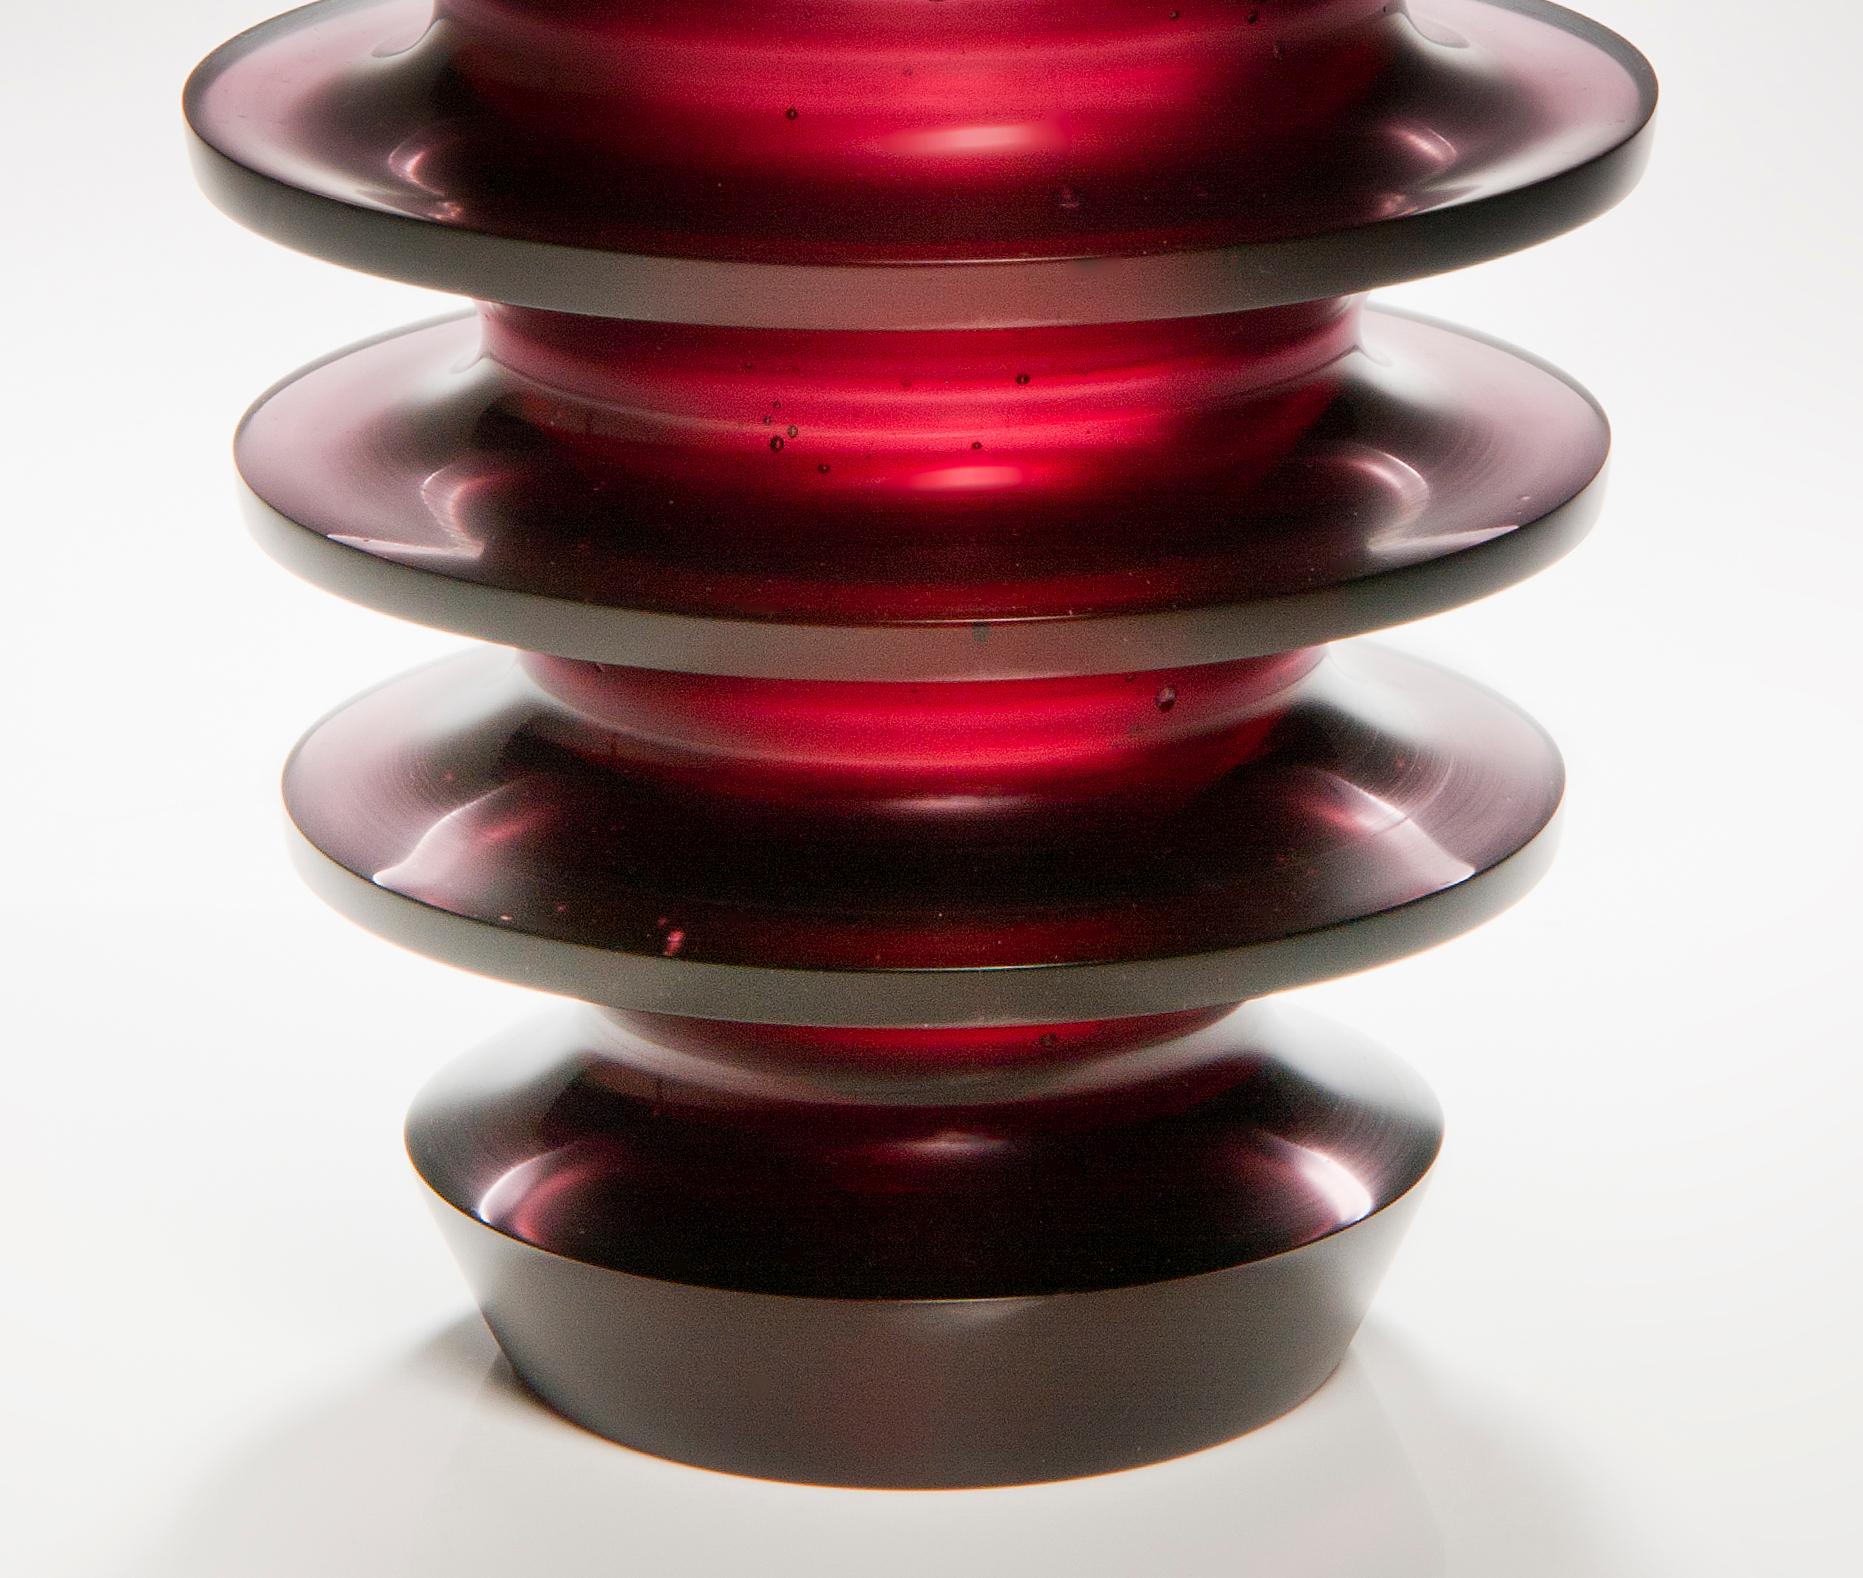 Contemporary Leila, a unique dark purple / blackberry coloured glass vase by Paul Stopler